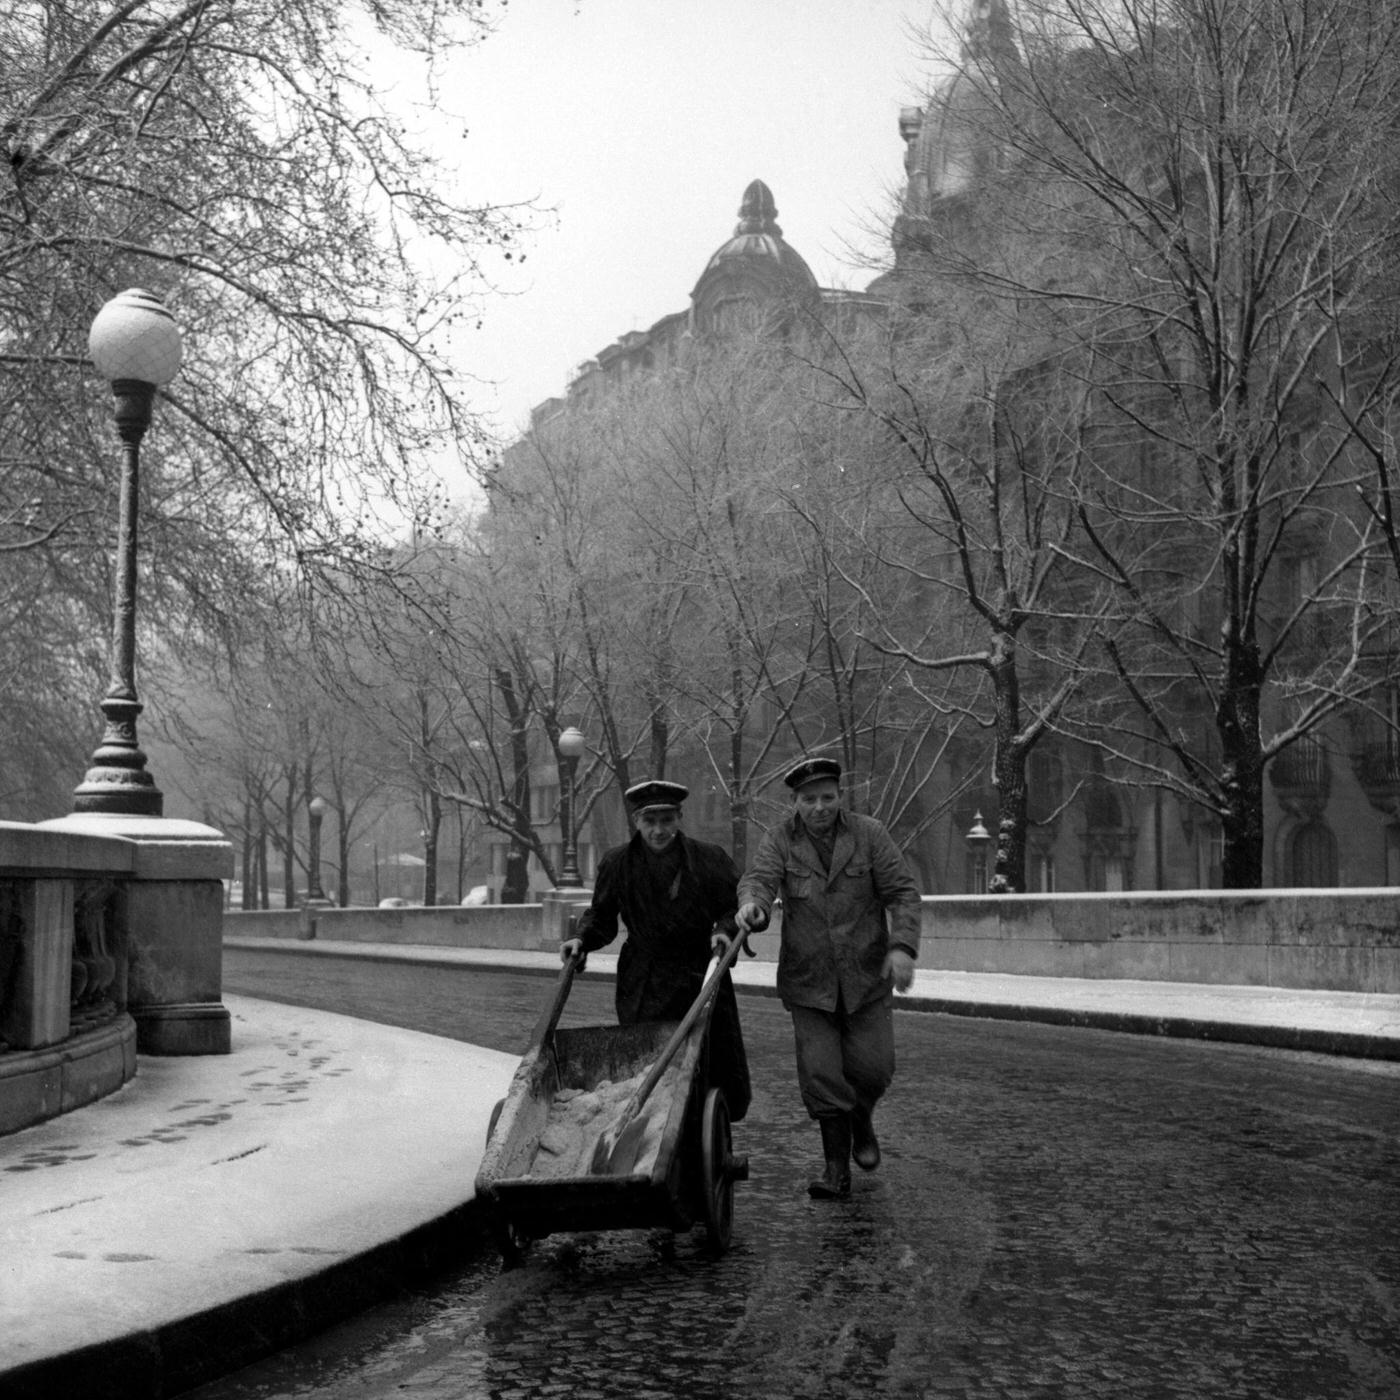 City Employees Spreading Salt After Snowfall, Paris, January 13, 1955.